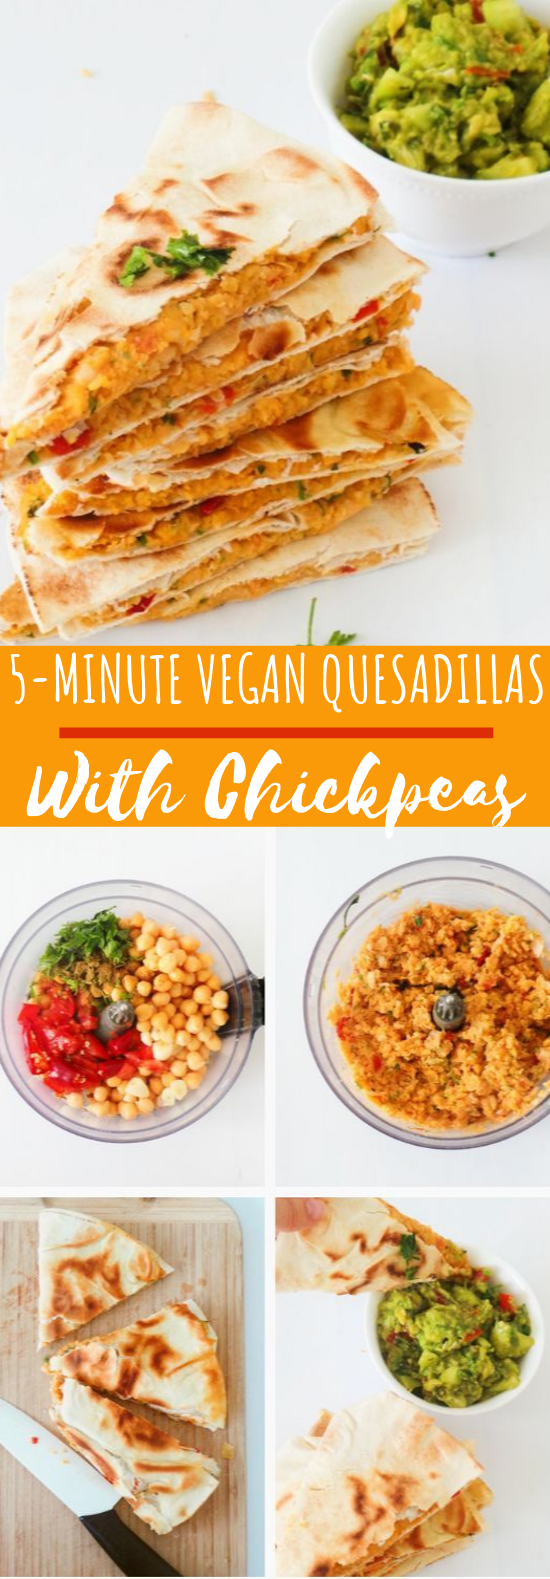 Vegan Quesadillas With Chickpeas #vegan #lunch